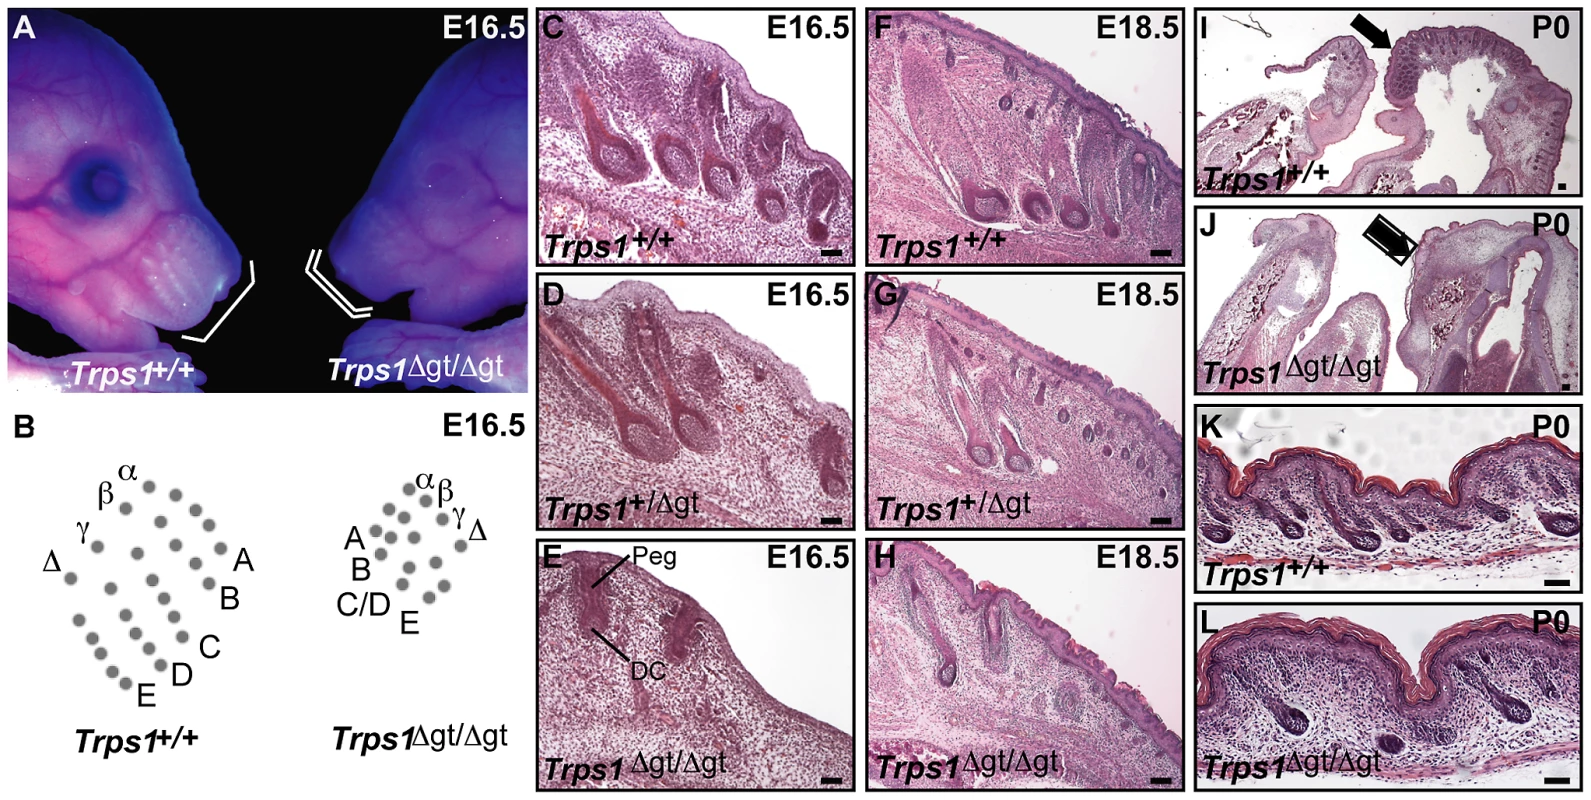 Late morphogenesis vibrissa follicle abnormalities in <i>Trps1<sup>Δgt/Δgt</sup></i> embryos.